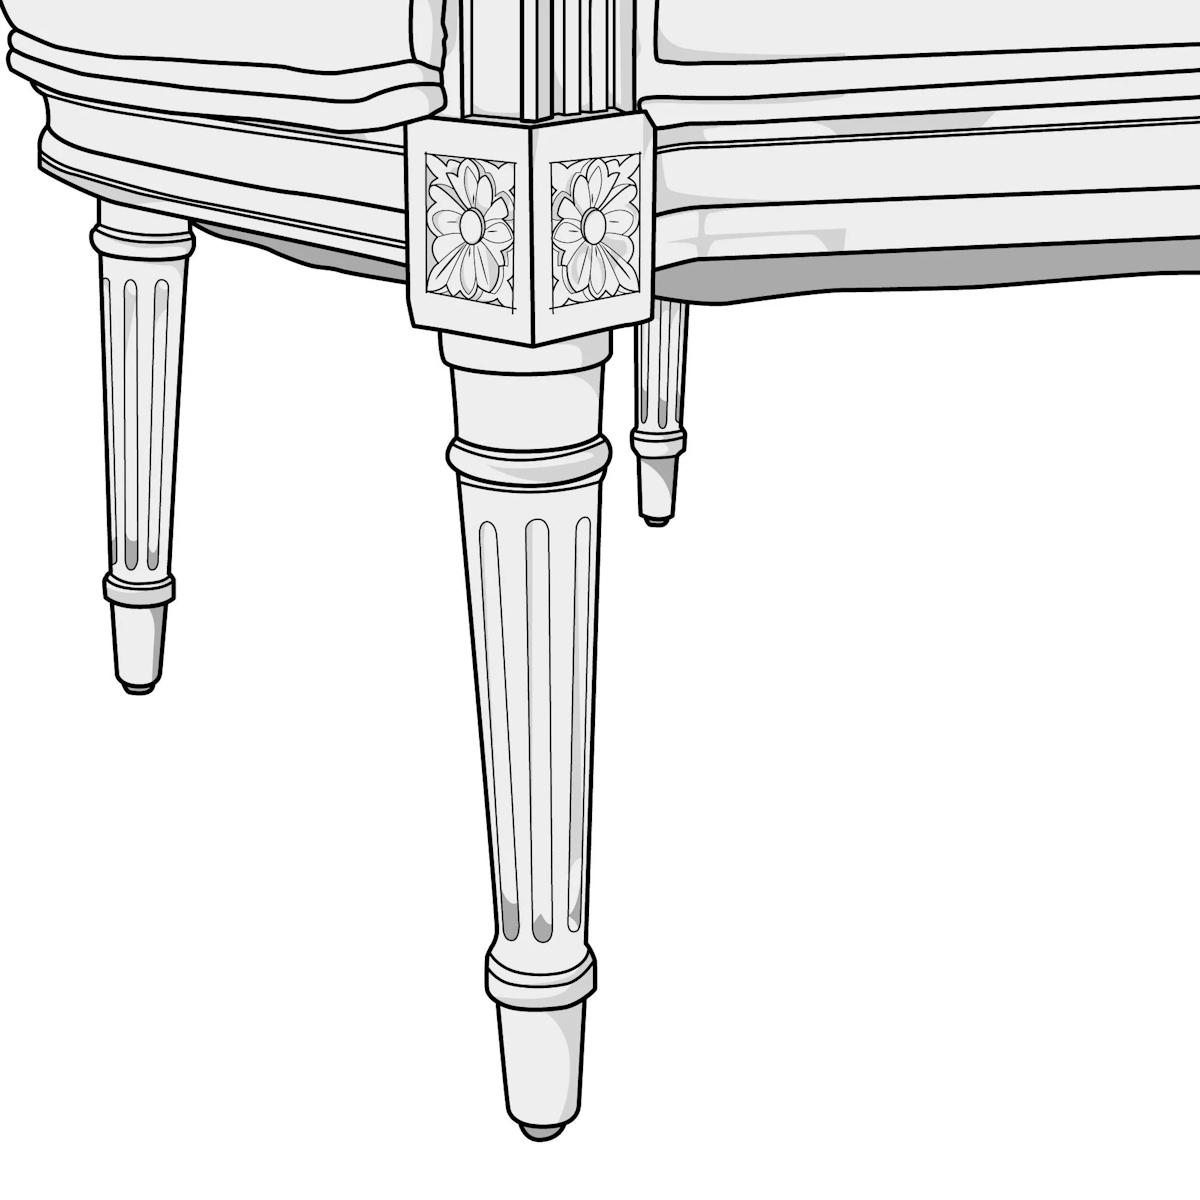 Illustration of arrow foot style sofa